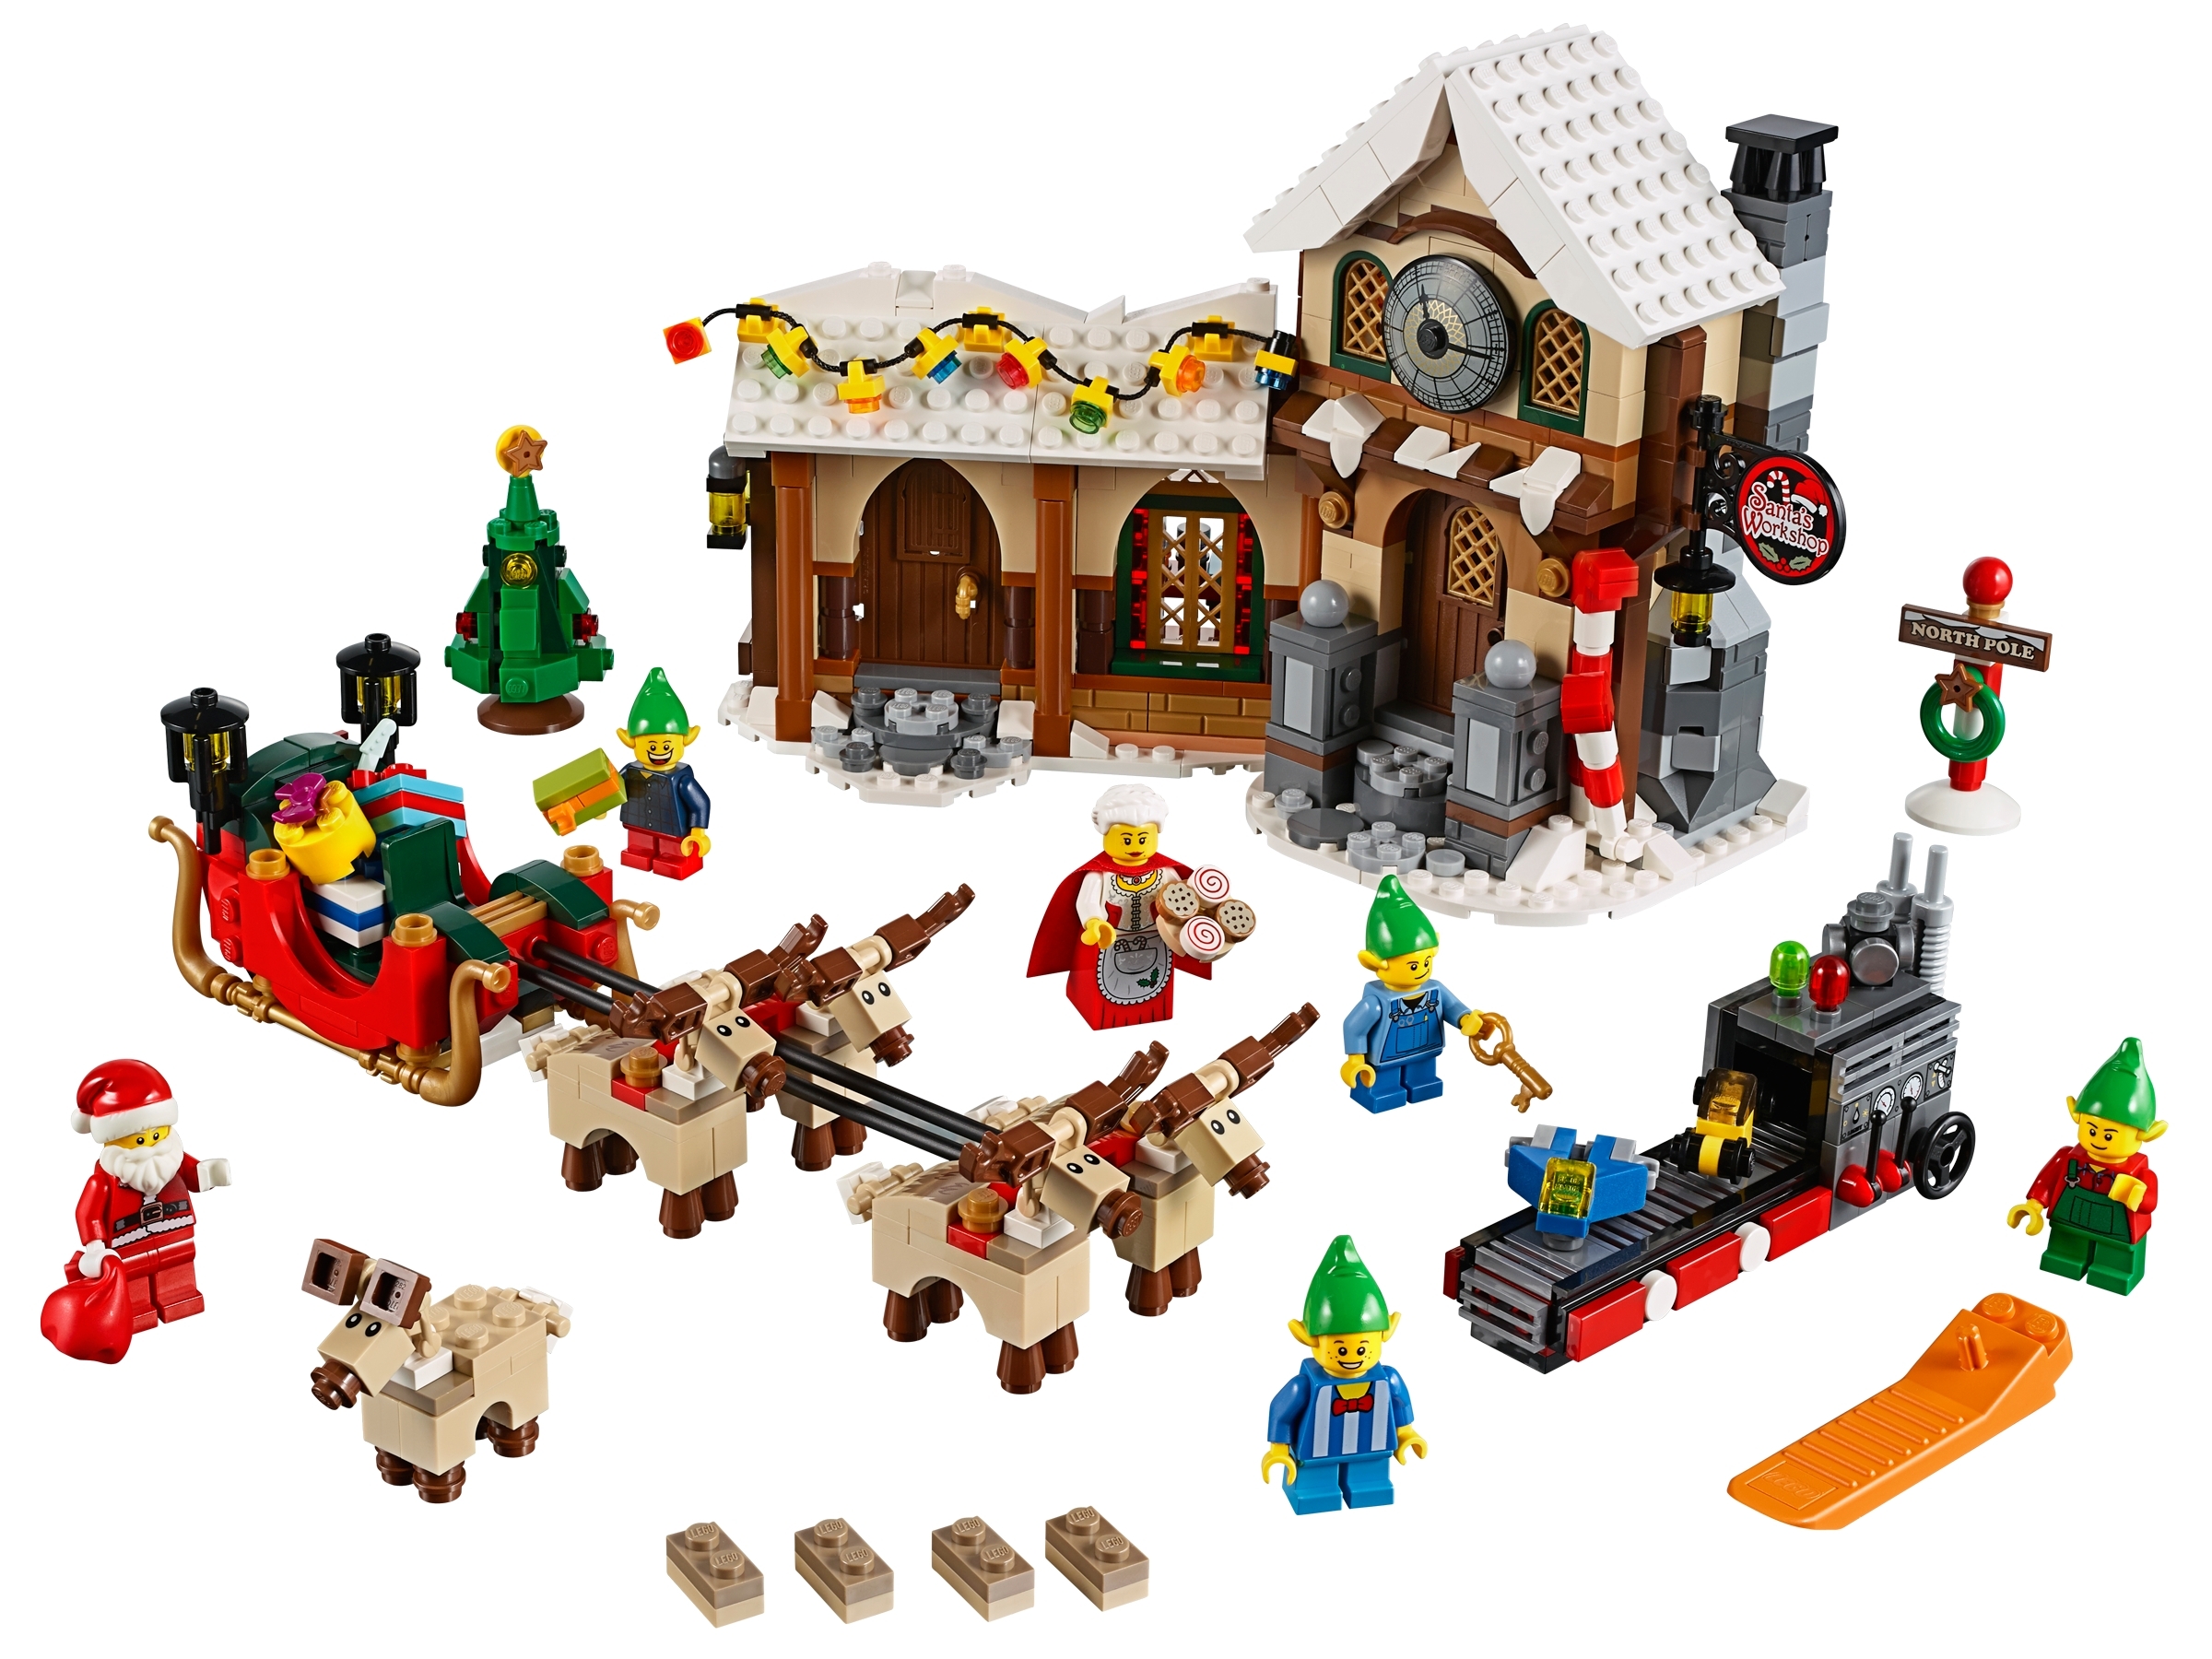 LEGO 10245 Winter Village Santa's Workshop Creator Expert New in Box Retired 